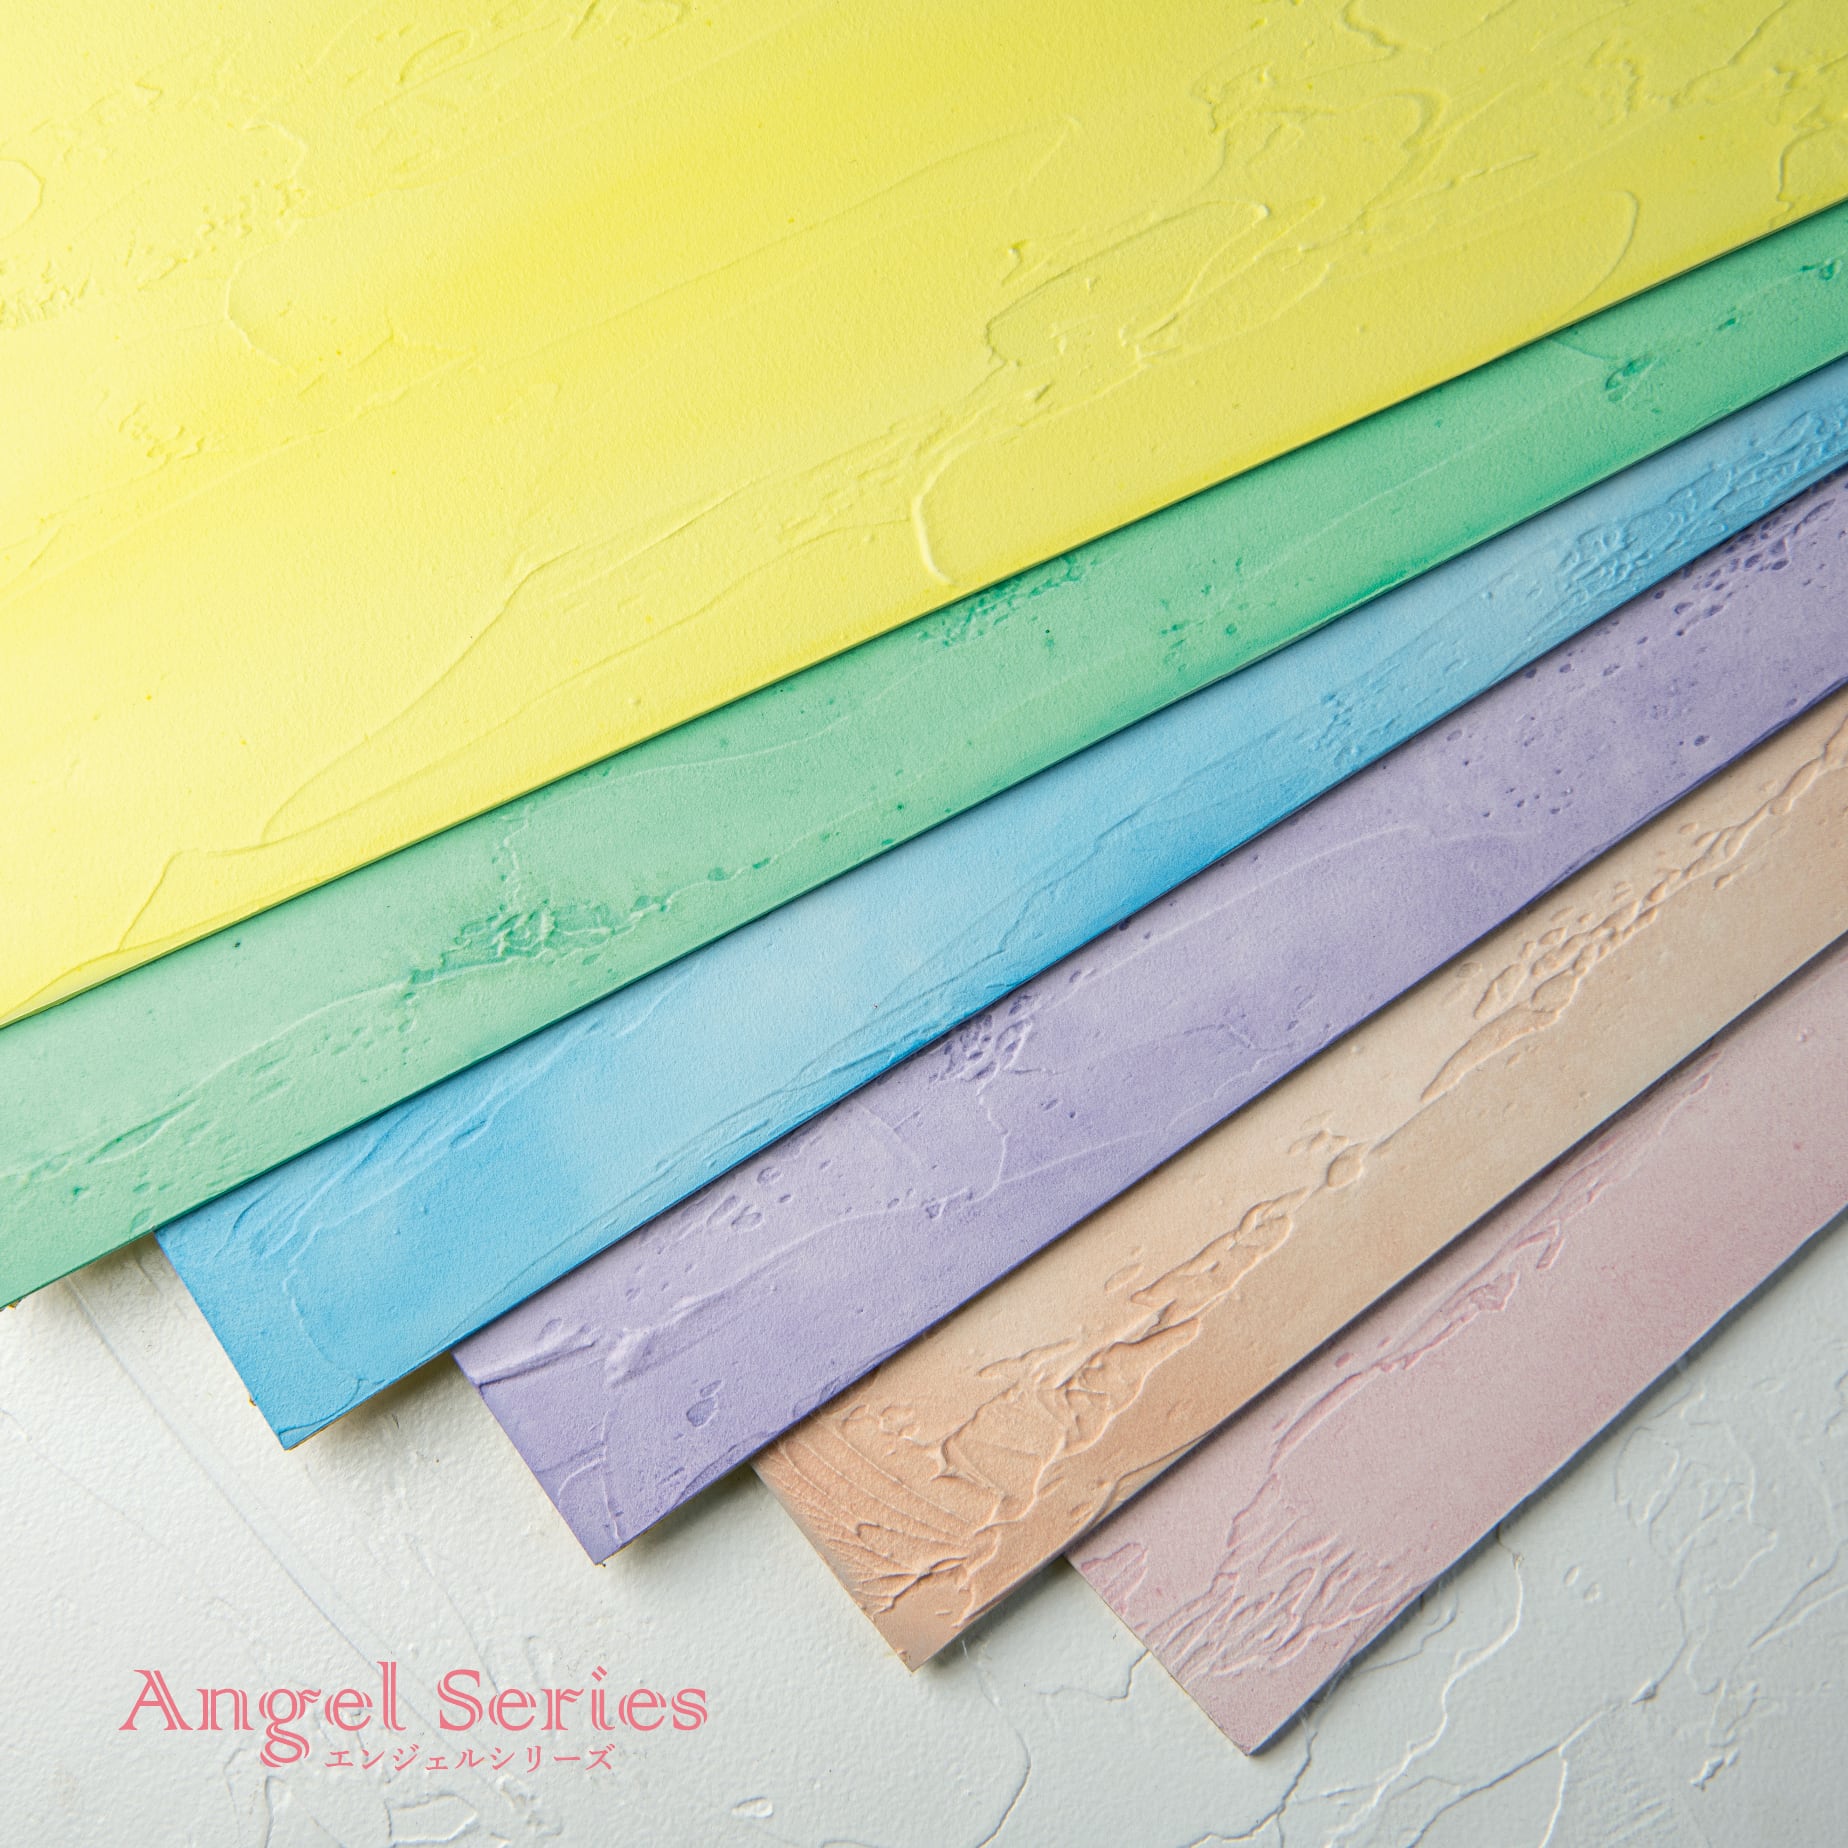 BAEL PHOTO BOARD PRO Gigas Angel Pastel color series〈ガブリエルパステルブルー〉